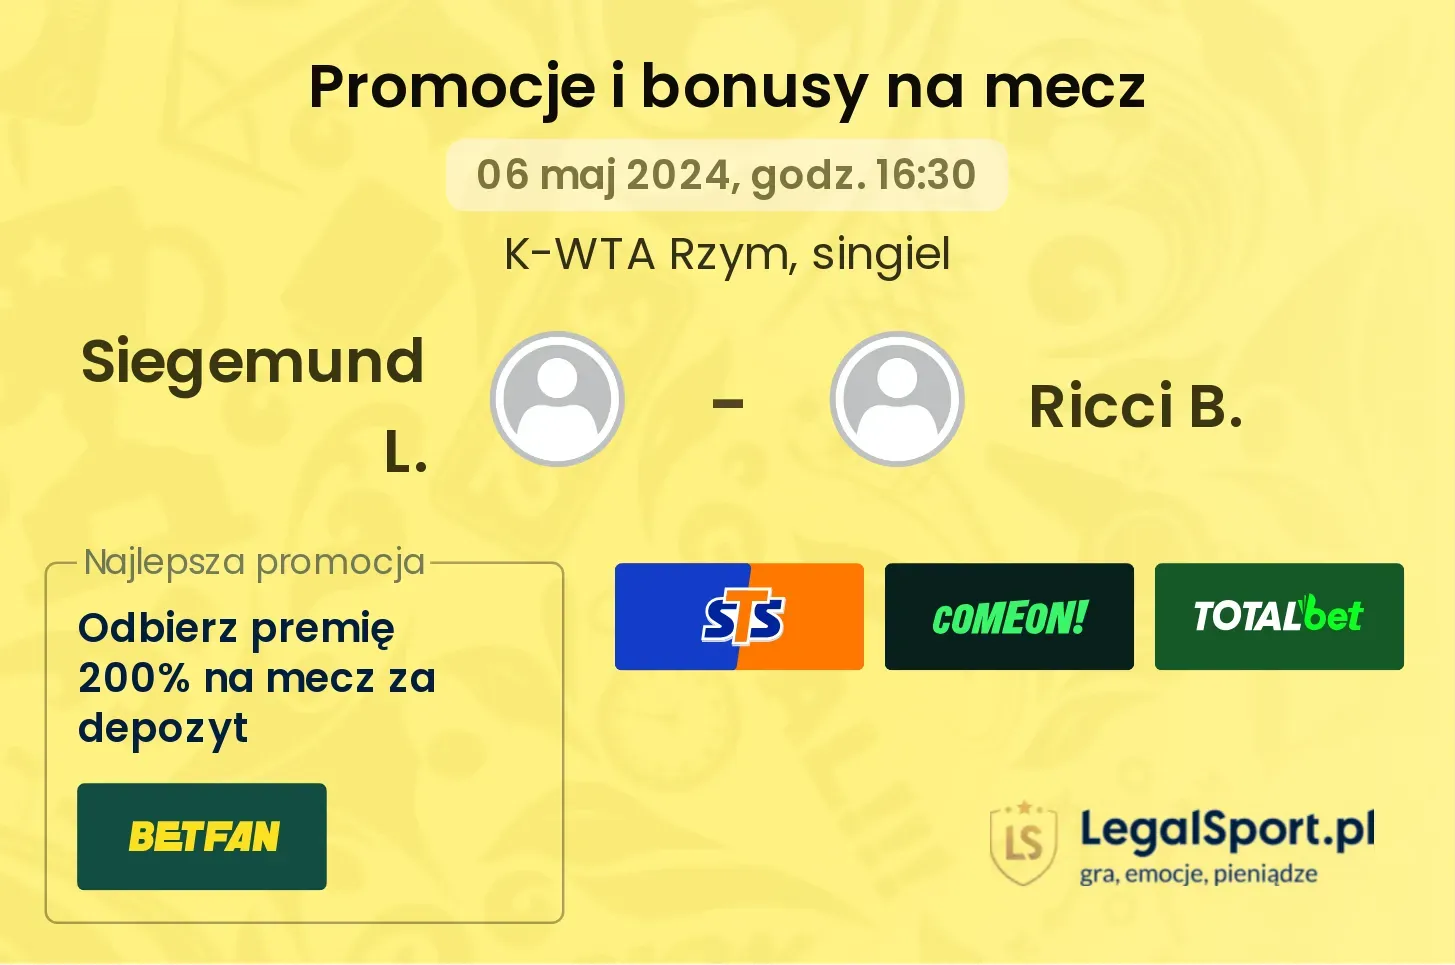 Siegemund L. - Ricci B. promocje bonusy na mecz